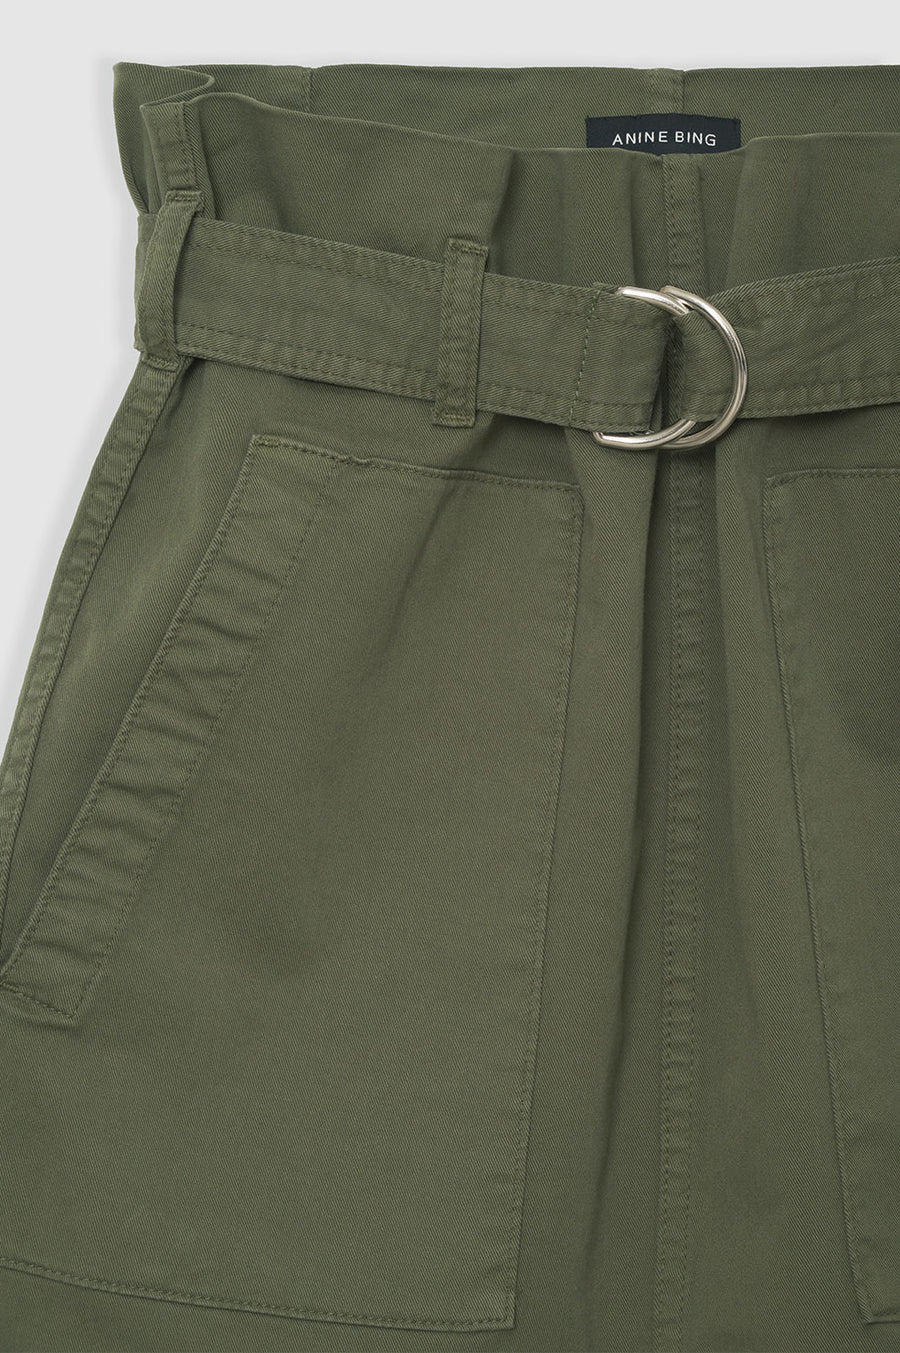 ANINE BING Aveline Skirt in Army Green L